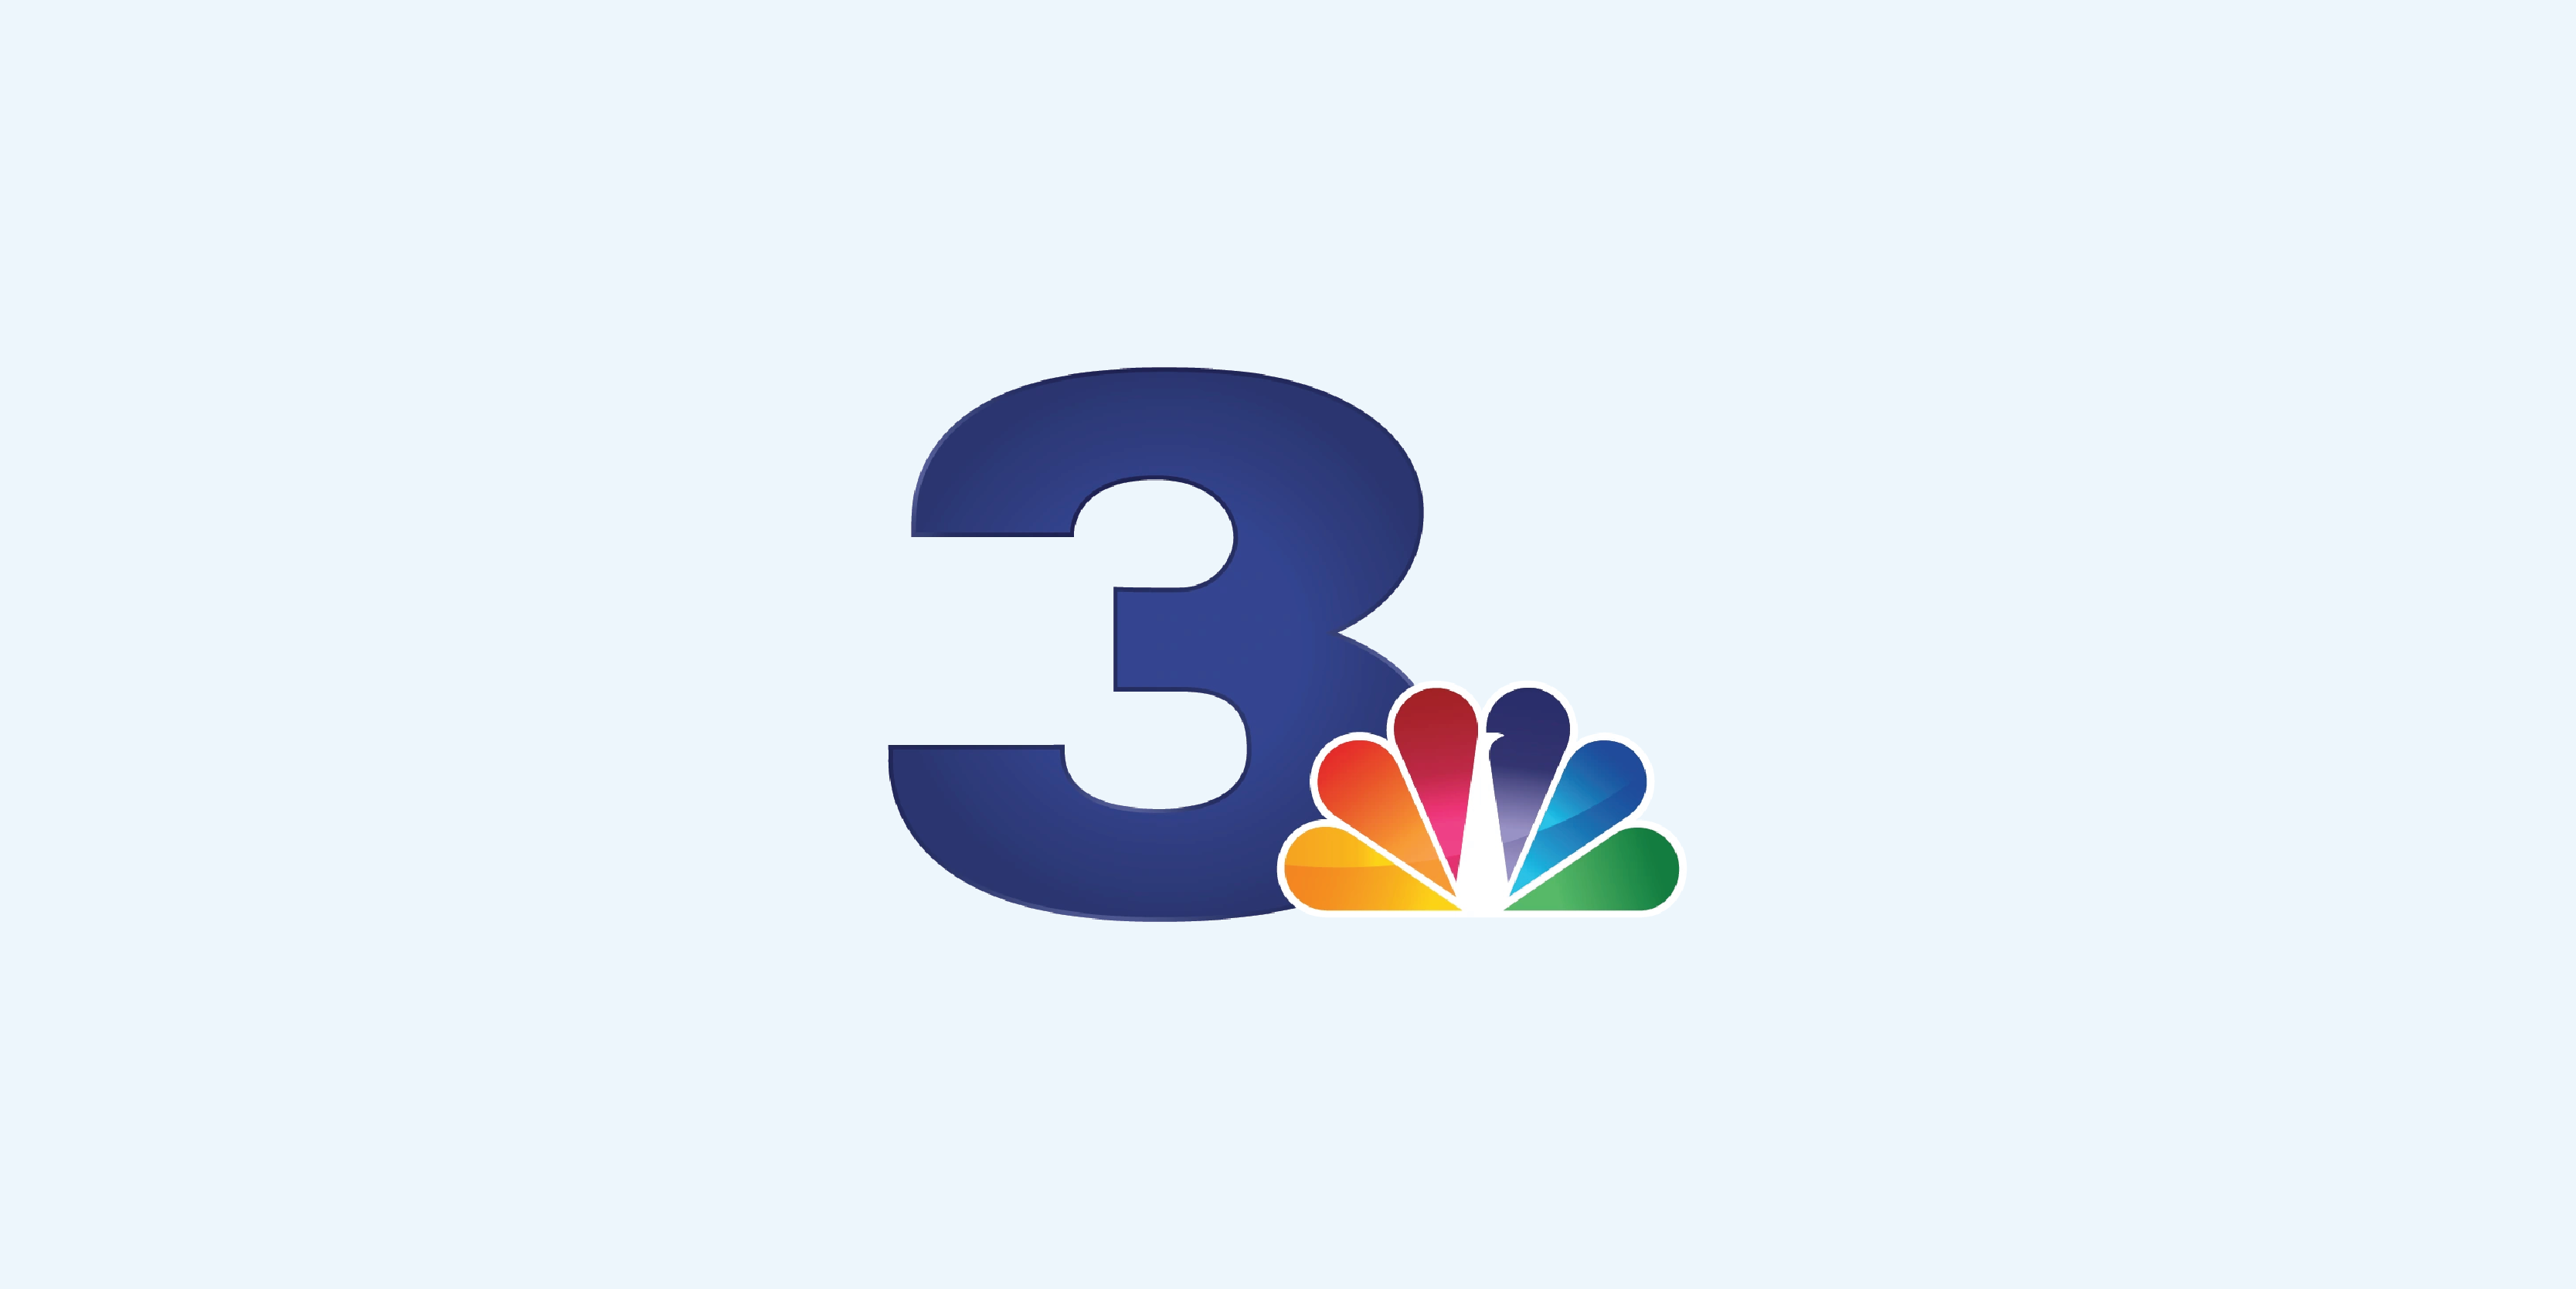 NBC Channel 3